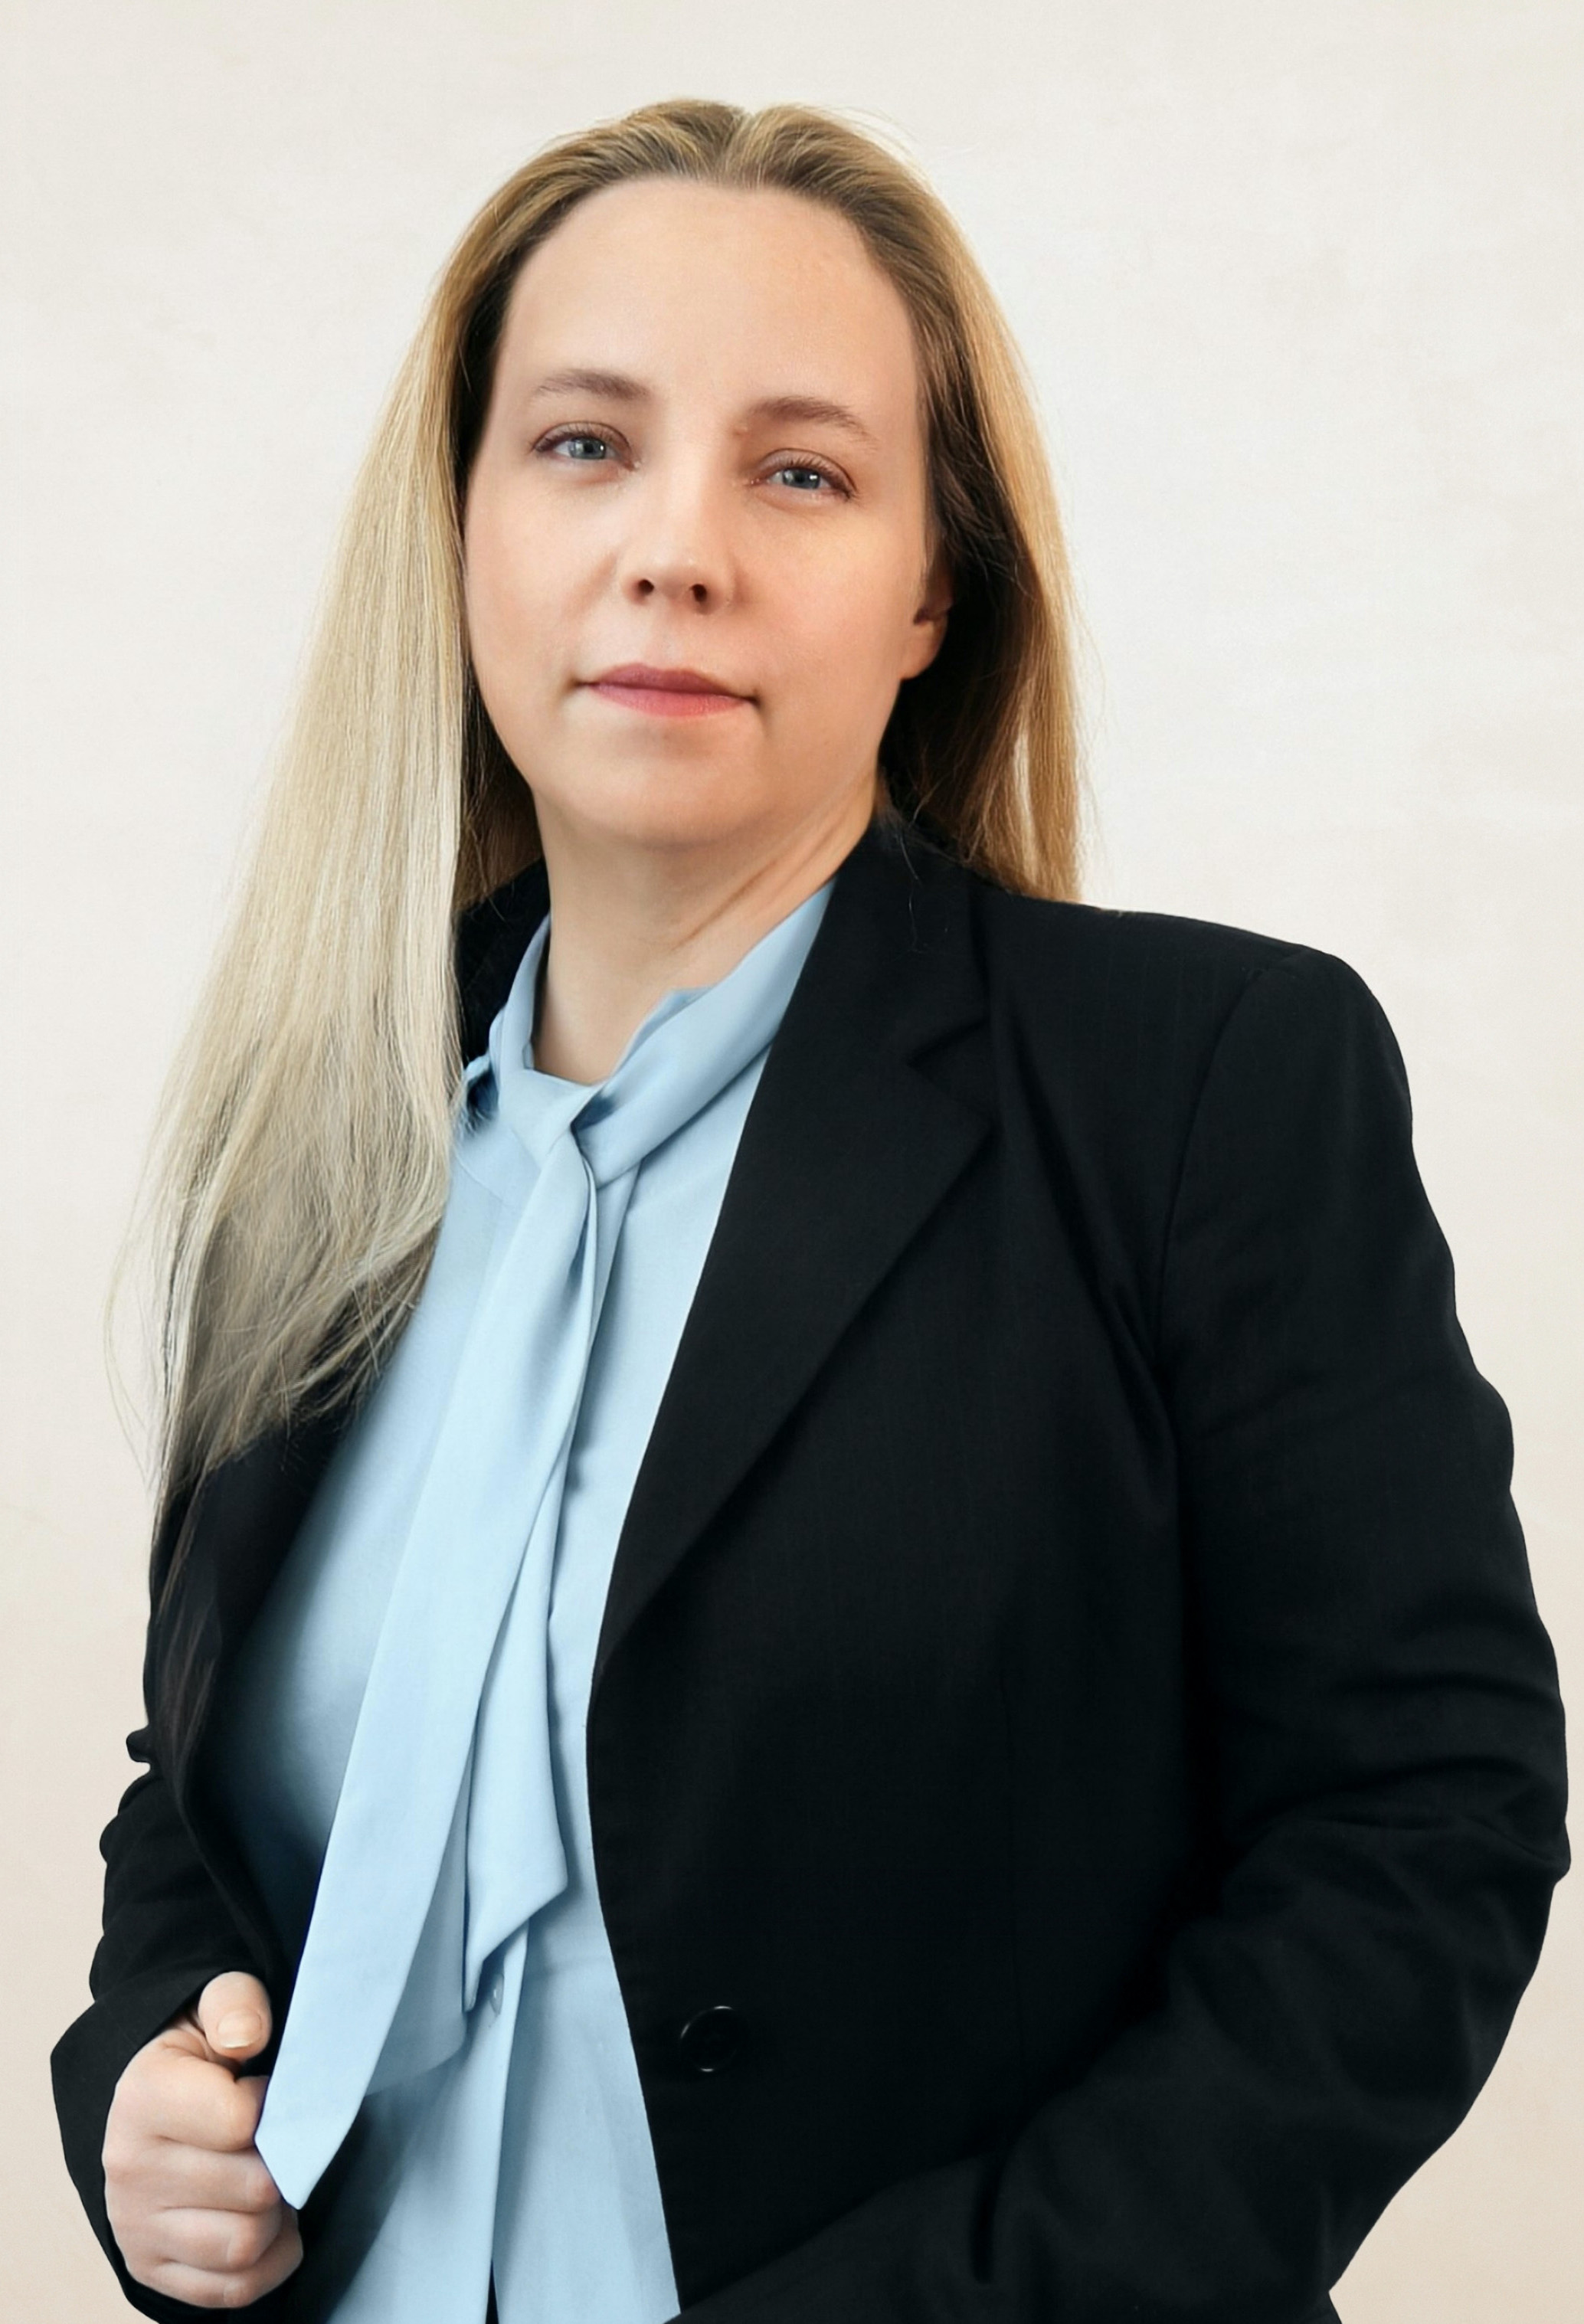 Anna Kakurnikova - A.Zalesov & Partners Patent & Law Firm